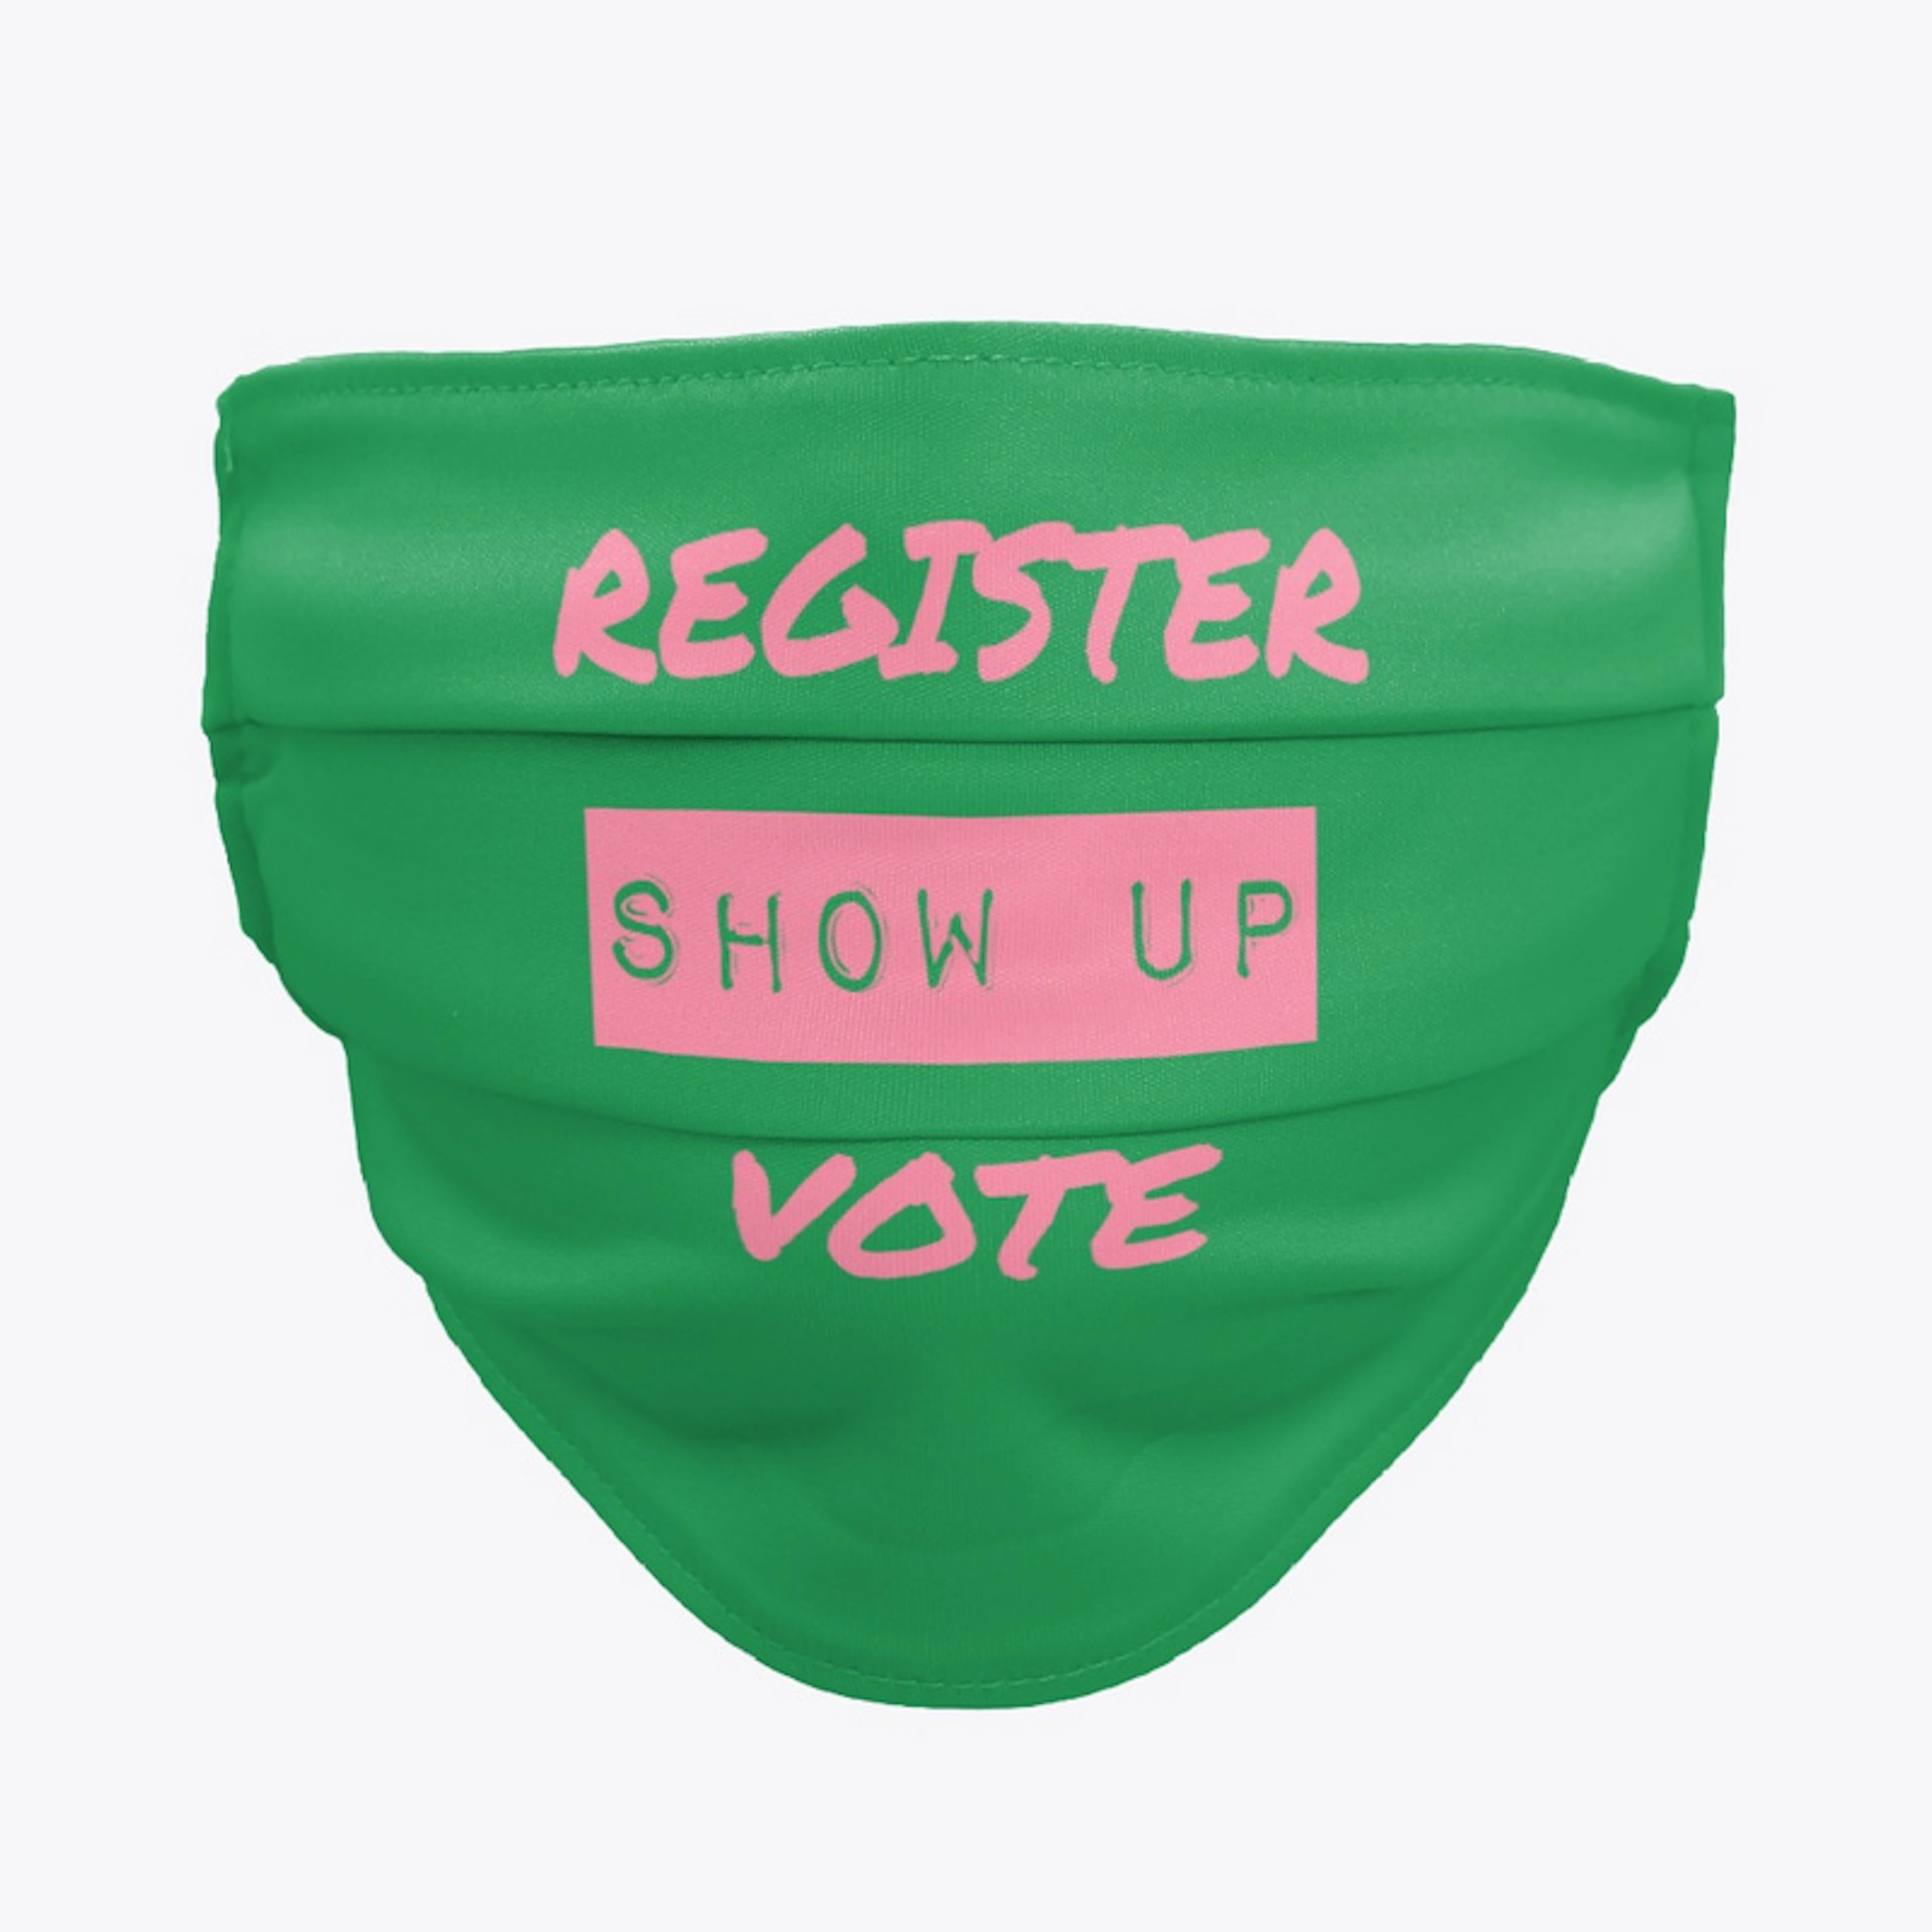 Register Show Up VOTE Pink Letters